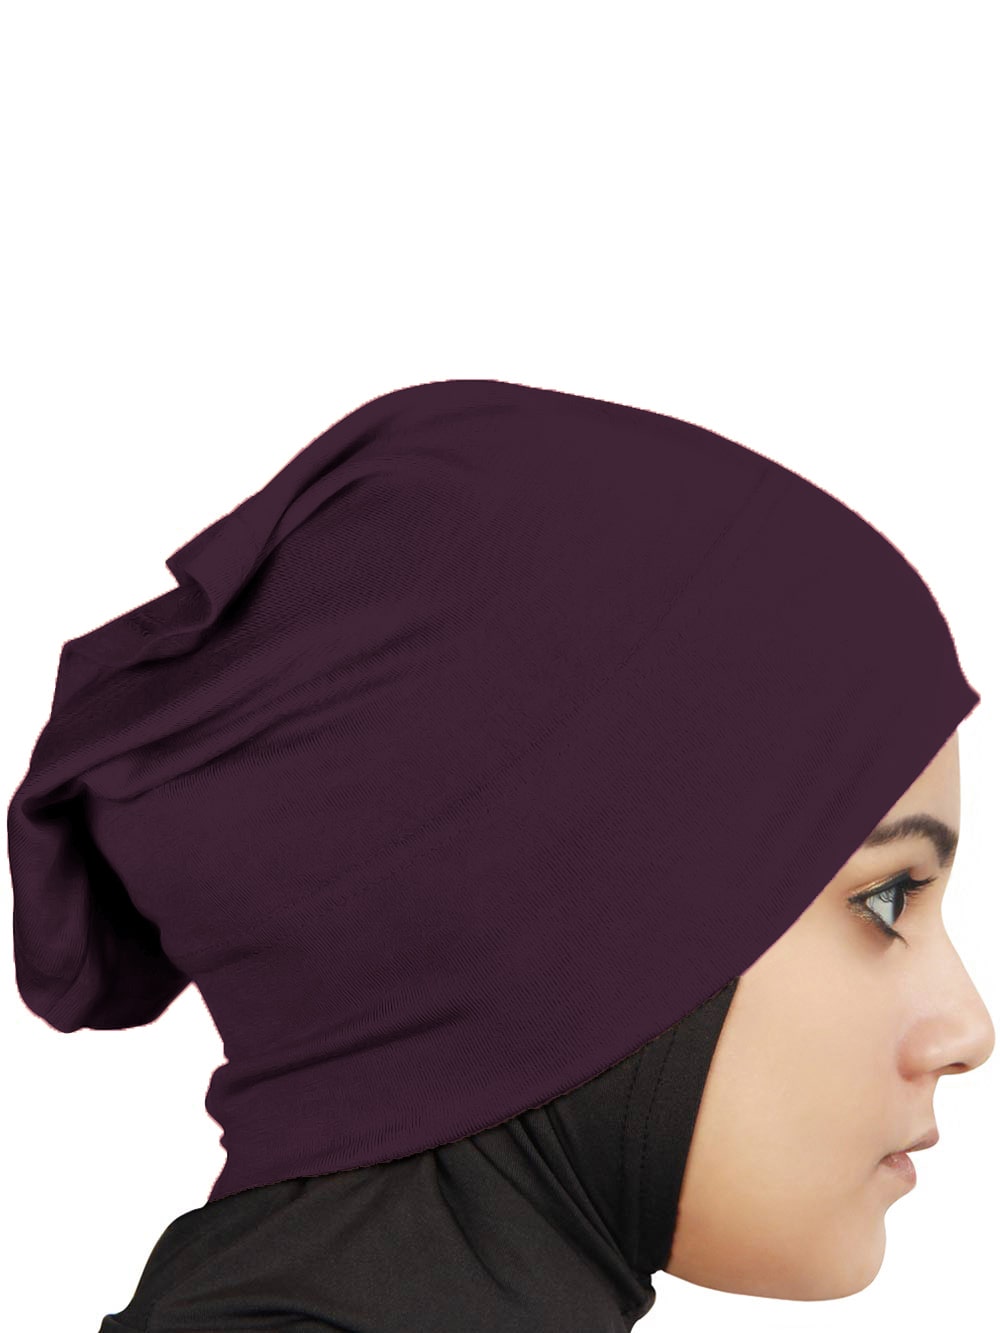 Two Piece Instant Dark Burgundy Viscose Jersey Hijab